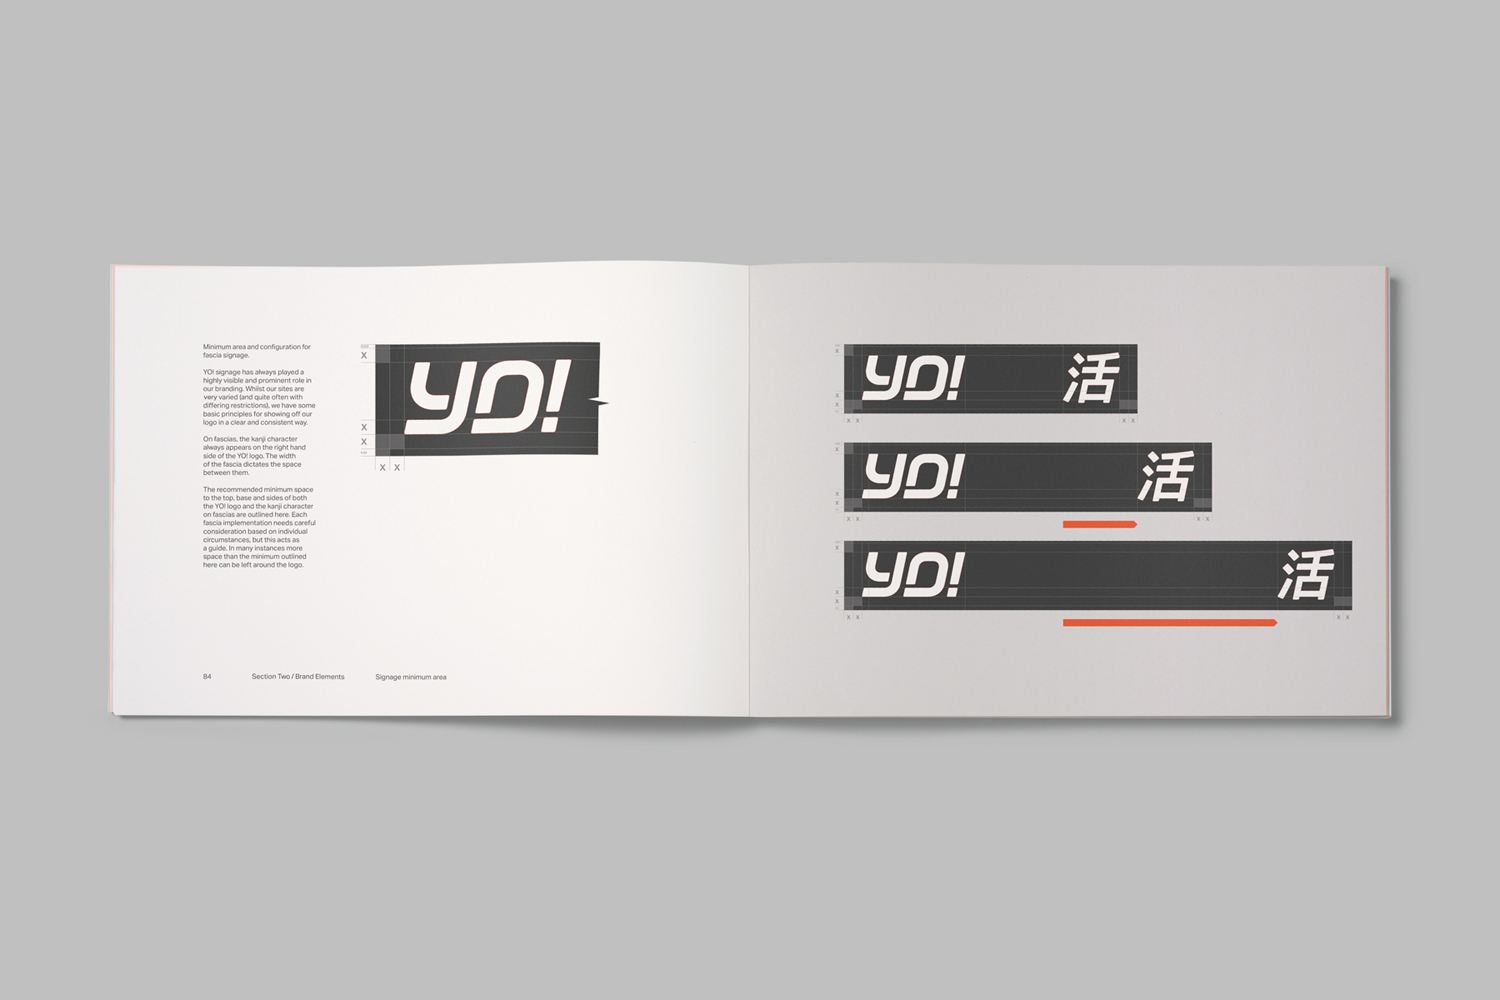 Brand book by London-based Paul Belford Ltd. for restaurant chain Yo! Sushi